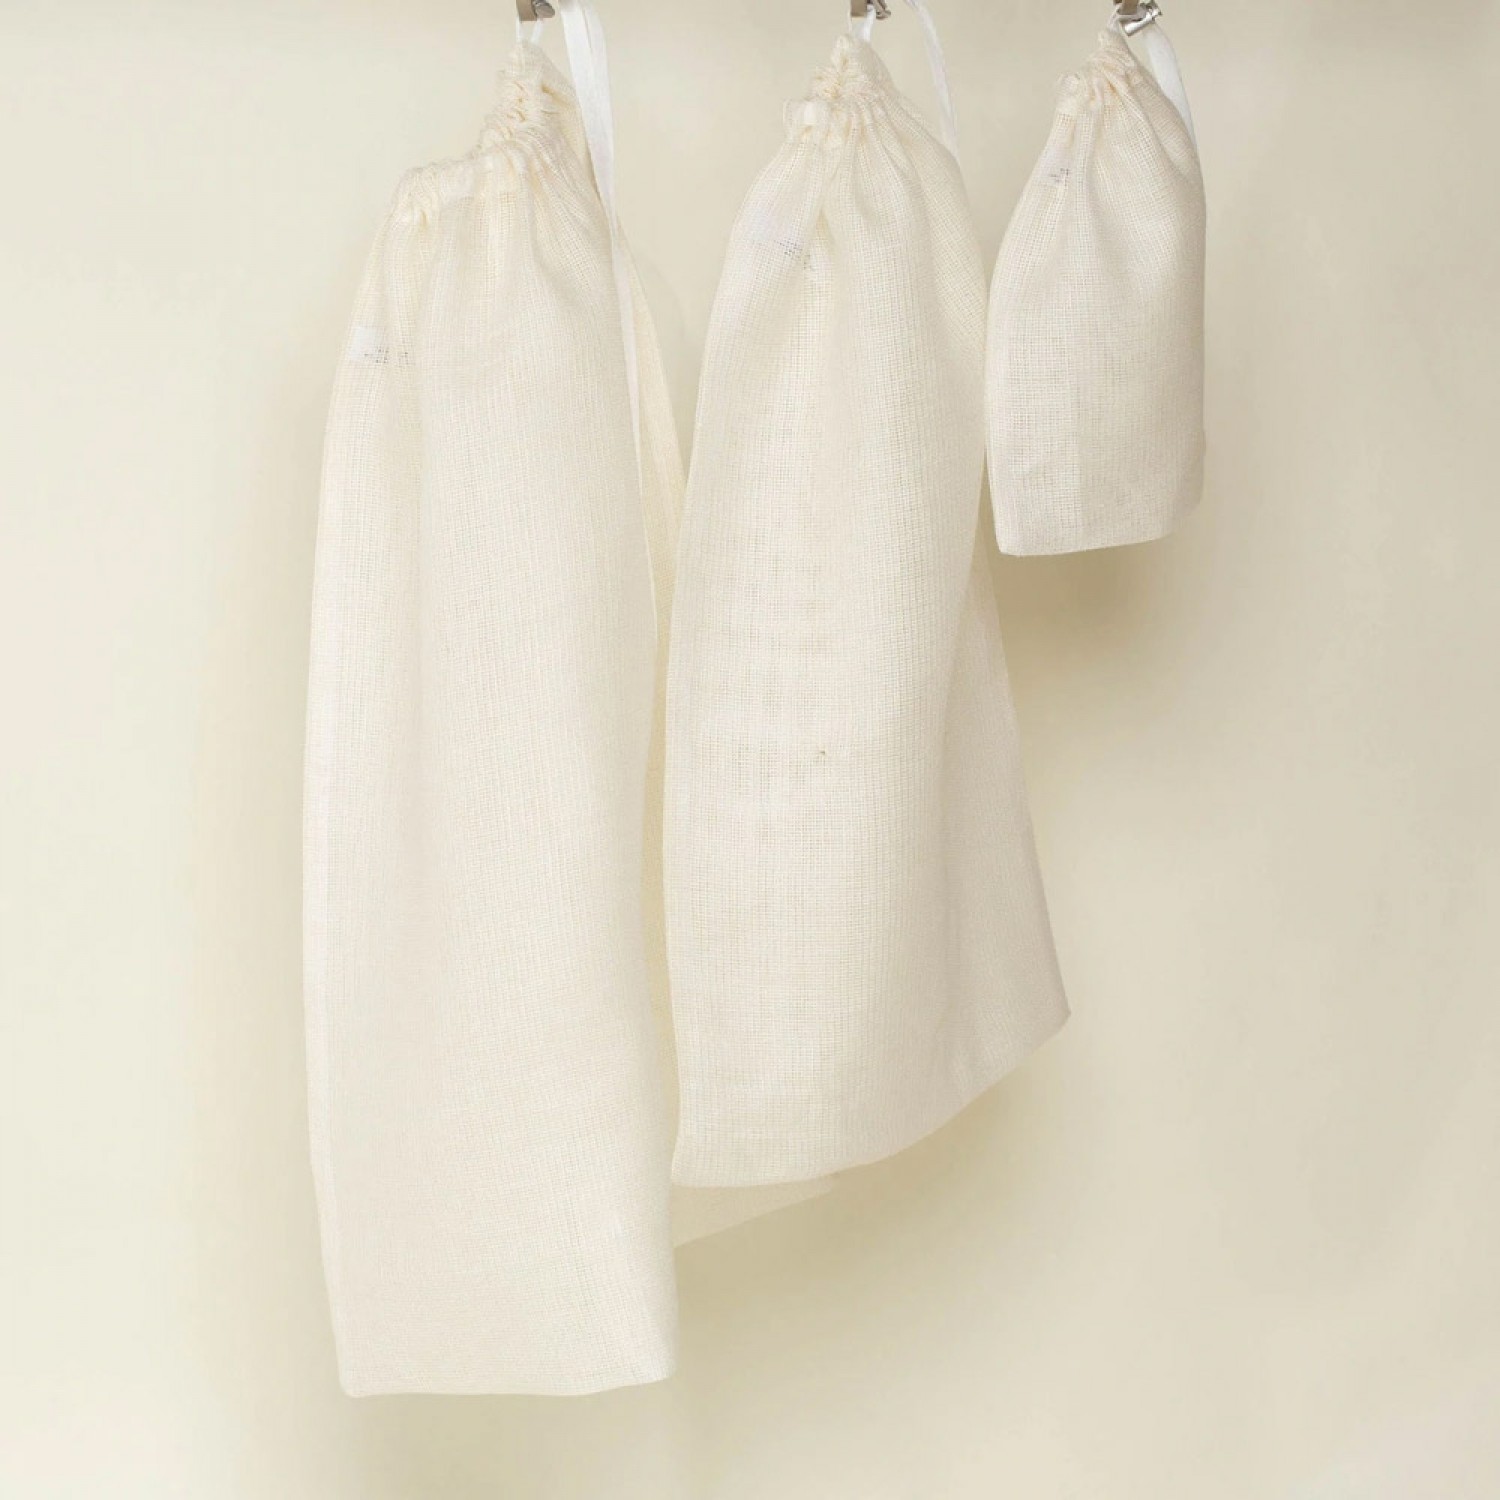 Organic Linen Mesh Laundry Bags - Set of 3 white » nahtur-design